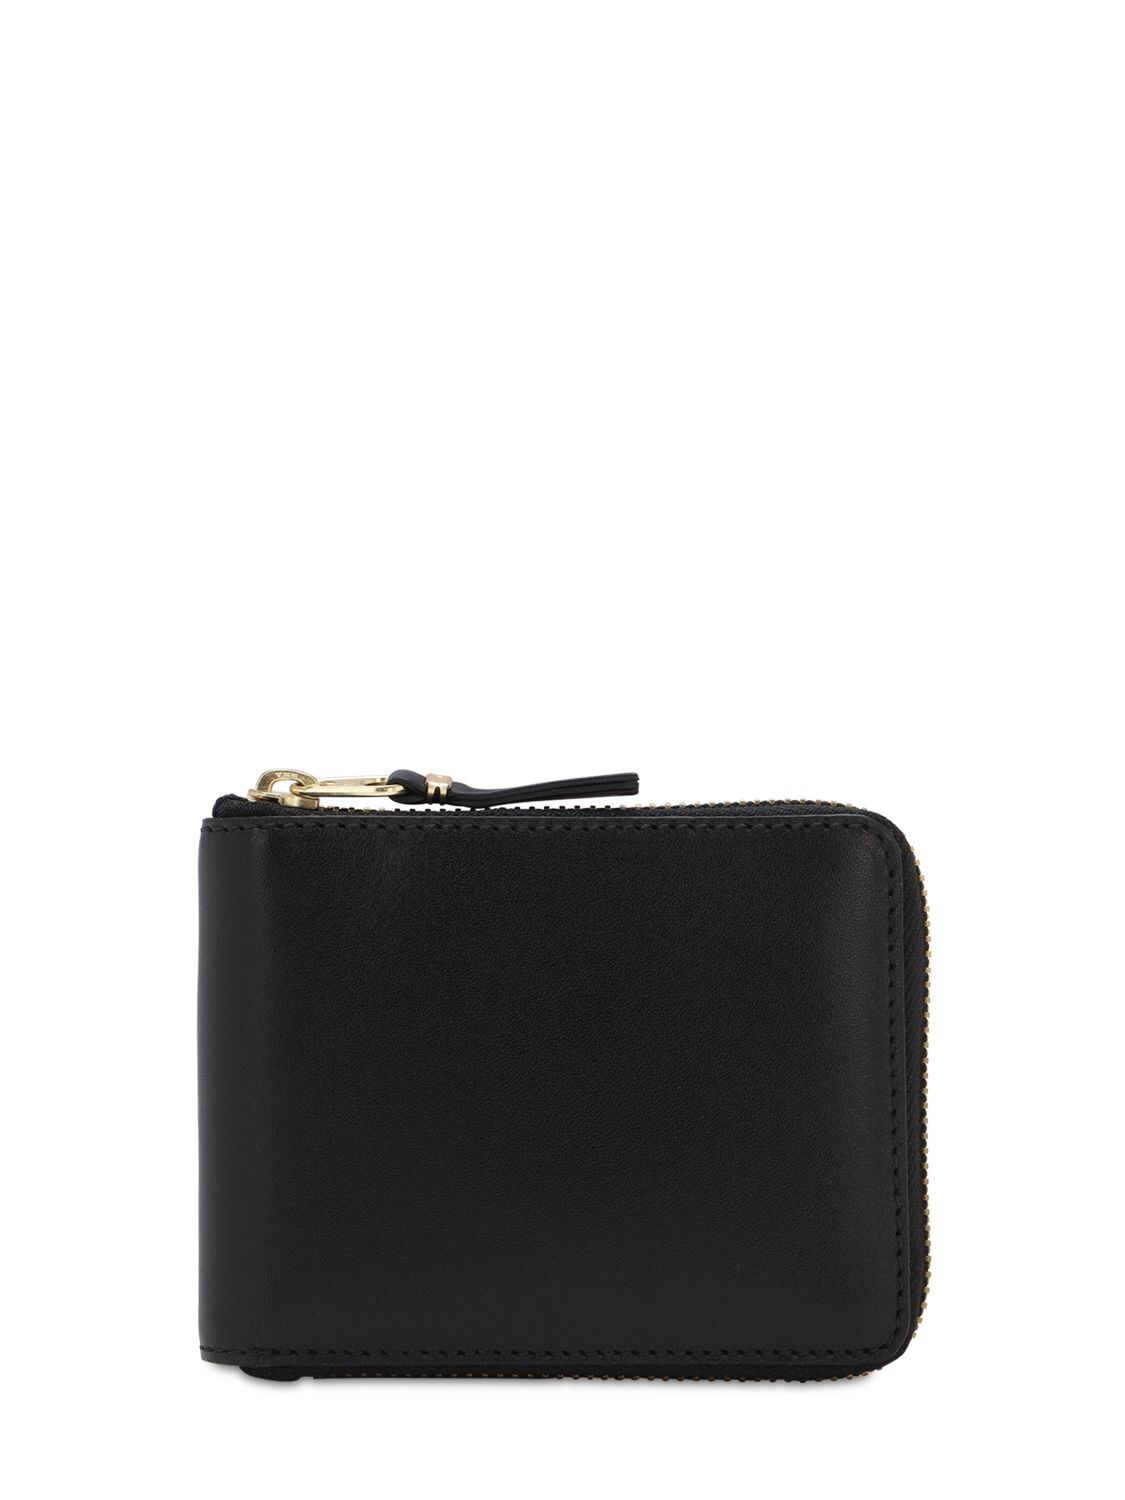 Comme Des Garçons Classic Leather Zip-around Wallet In Black | ModeSens